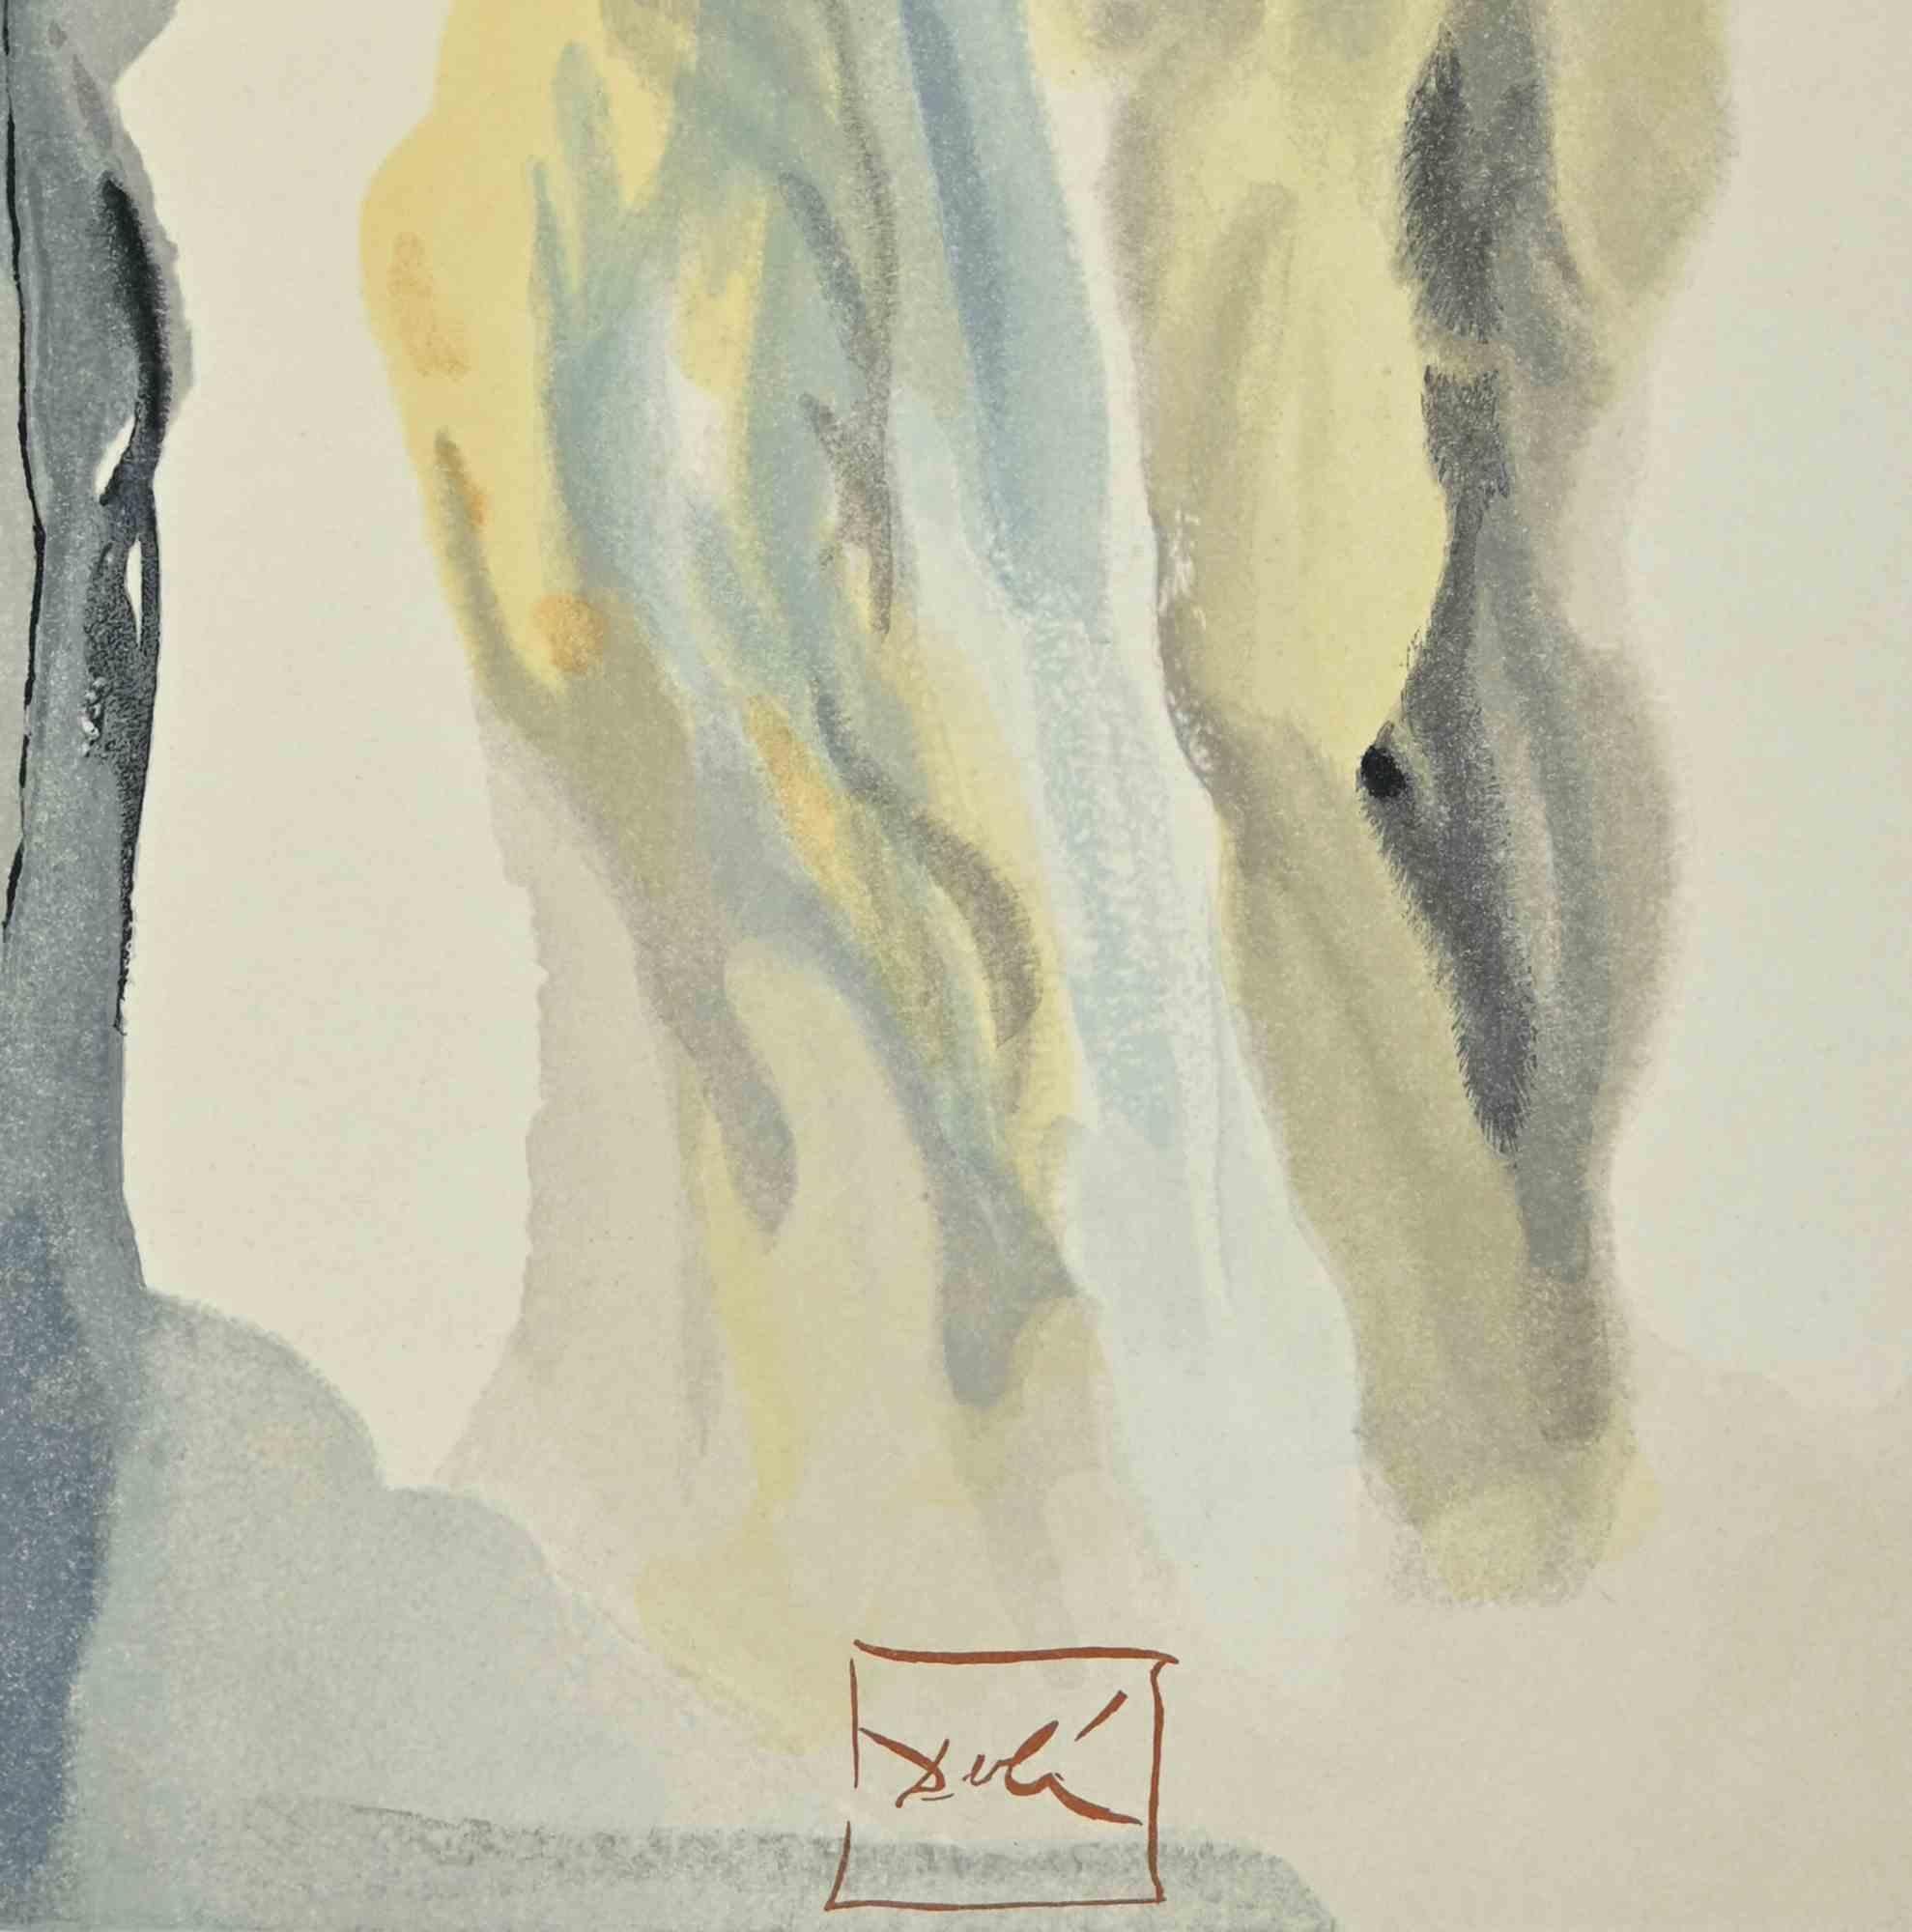 The Heaven of Venus – Holzschnittdruck – 1964 – Print von Salvador Dalí